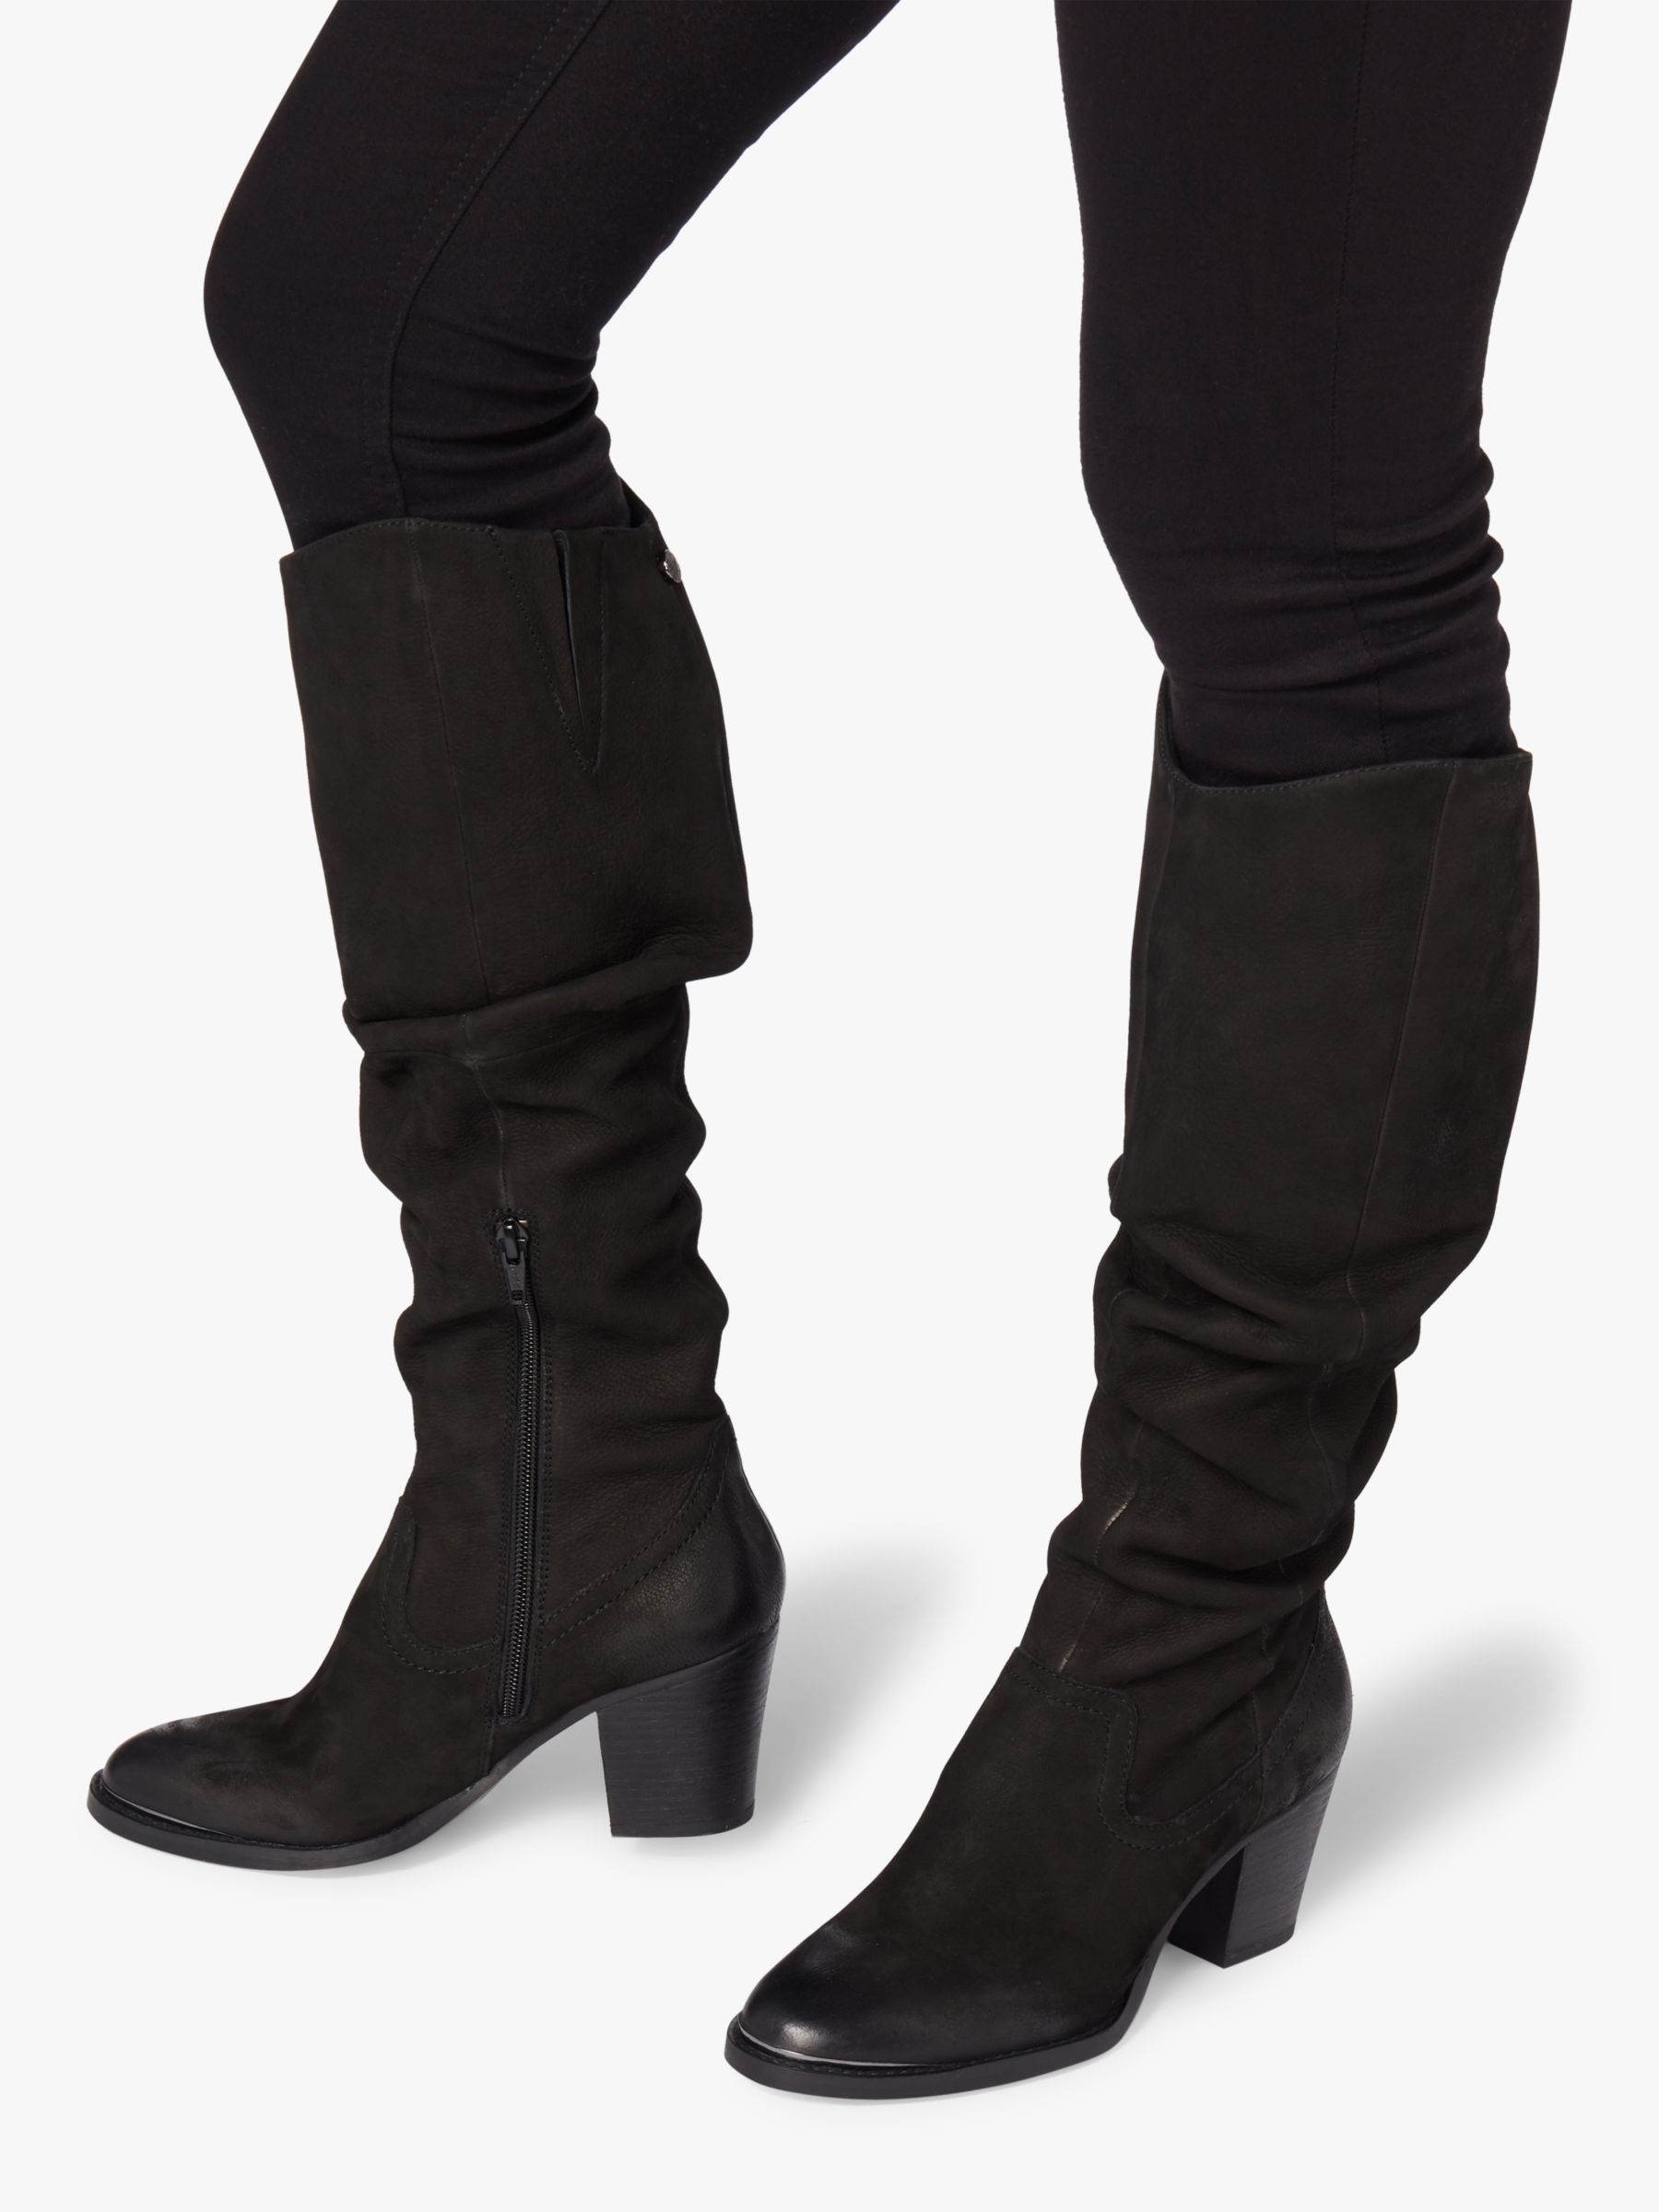 Steve Madden Rova Knee High Boots, Black Leather